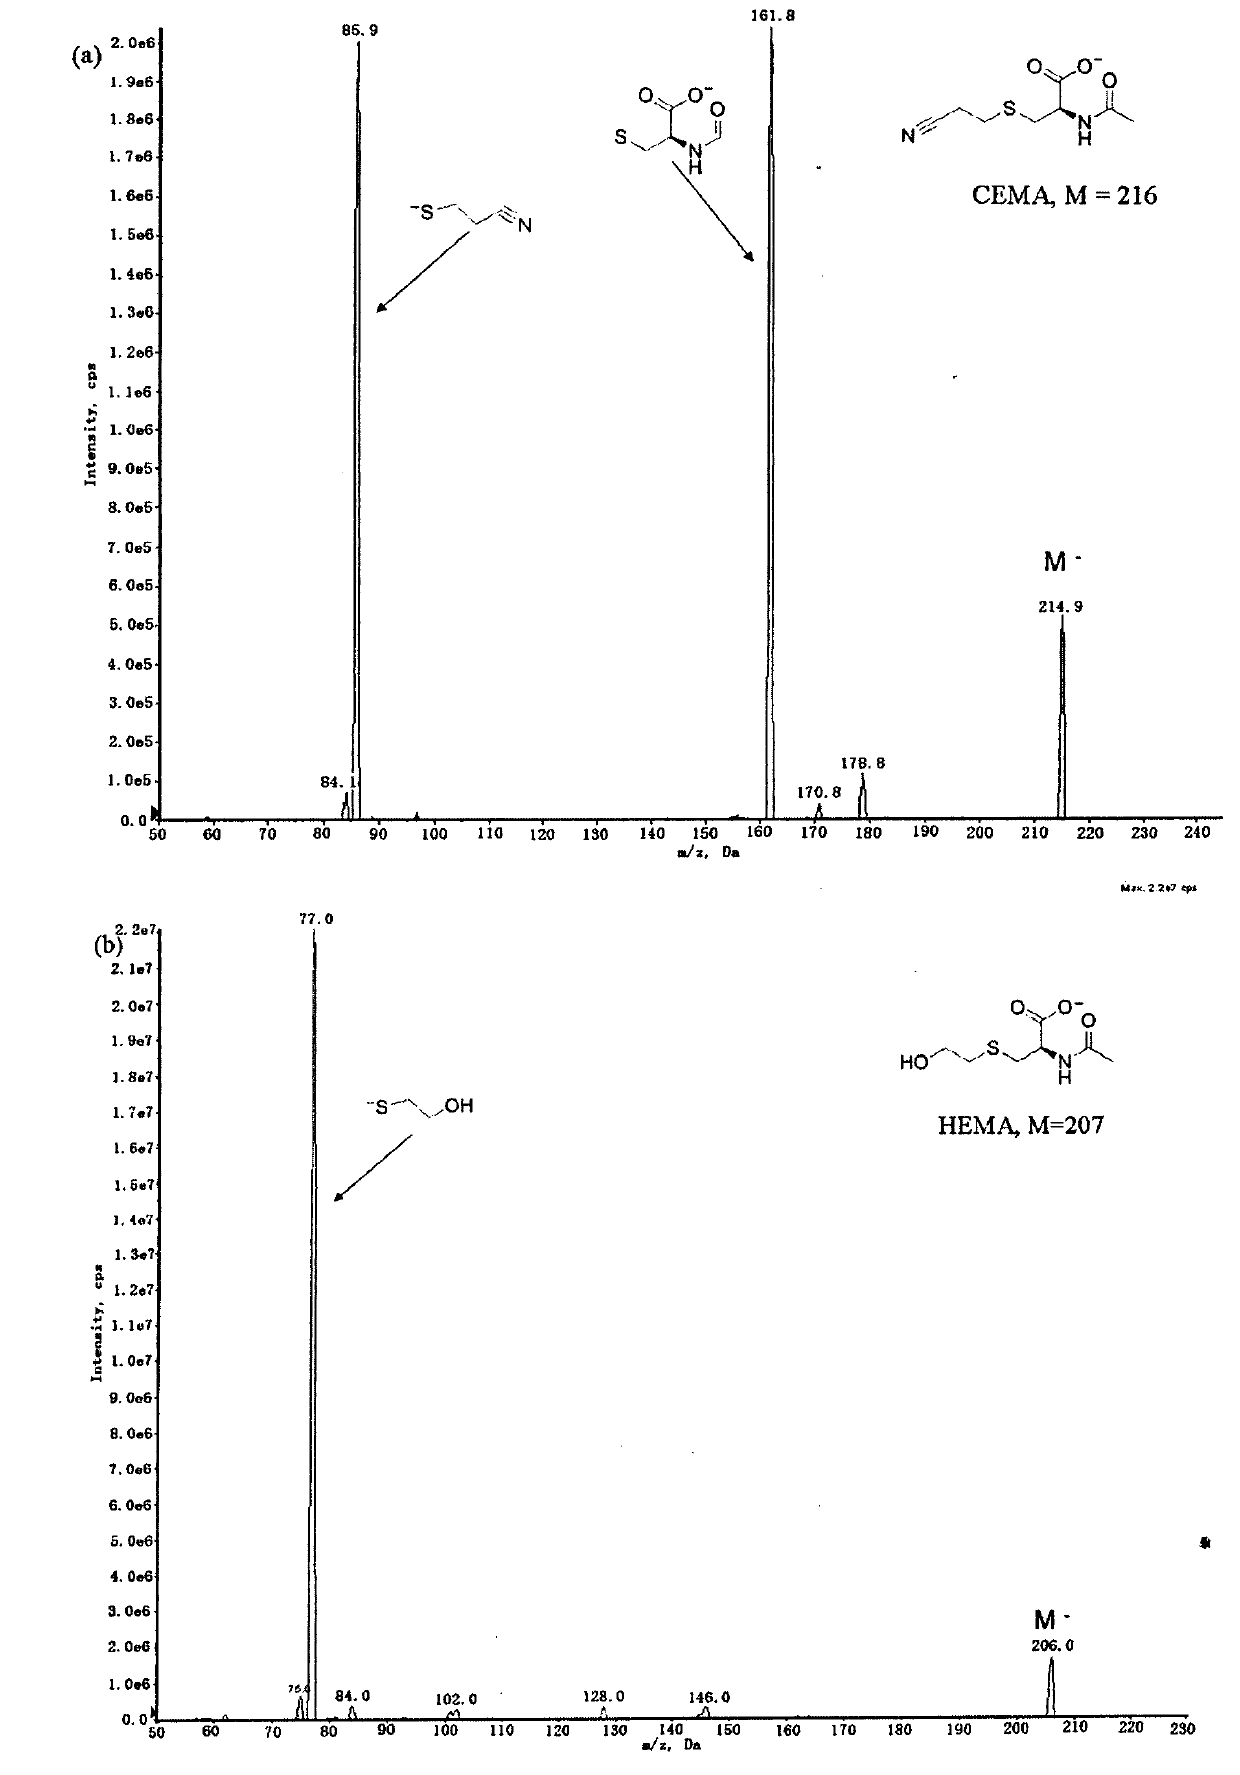 Liquid-chromatogram and tandem-mass-spectrogram assay method for CEMA (Cyanoethyl Methacrylate) and HEMA (Hydroxyethyl Methacrylate) in urine